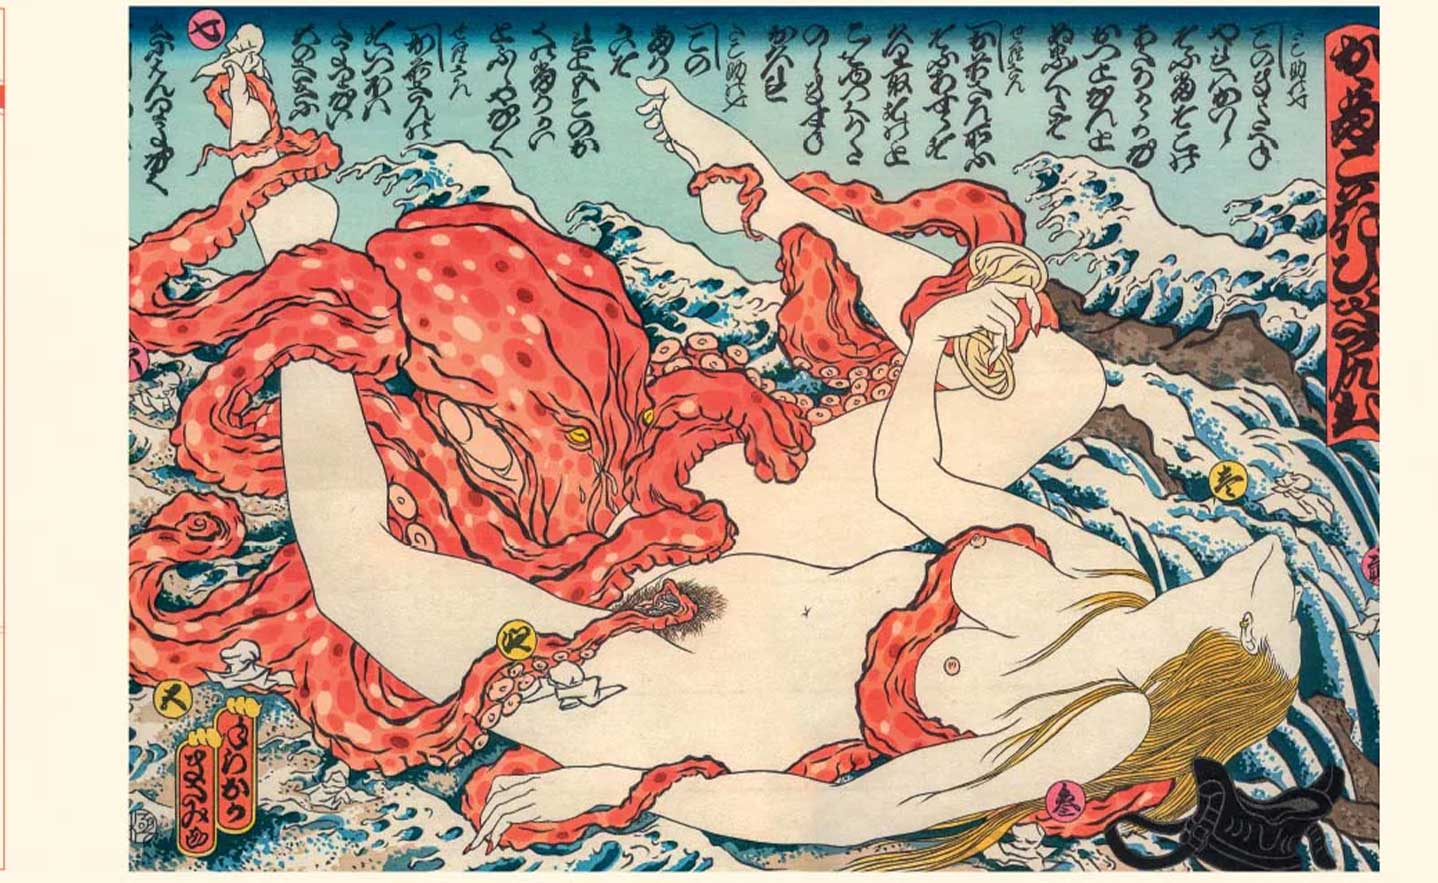 a Japanese erotic artwork